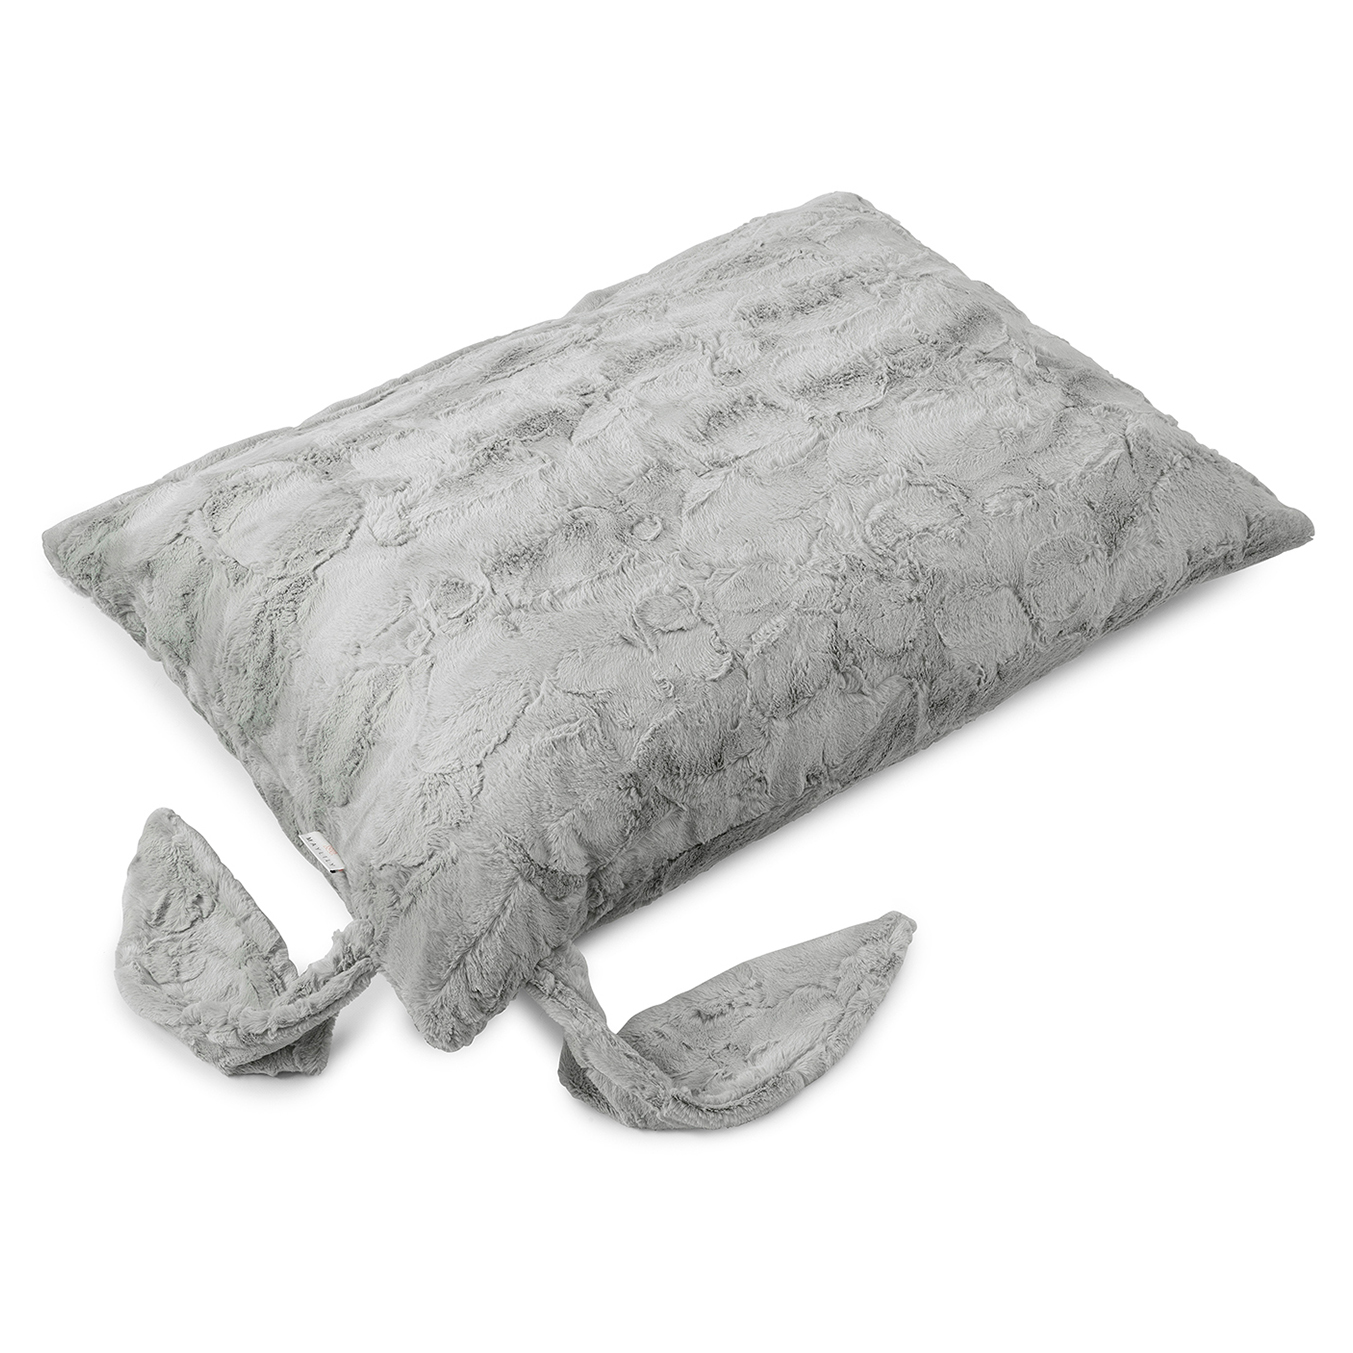 Bunny pillow XXL - Grey